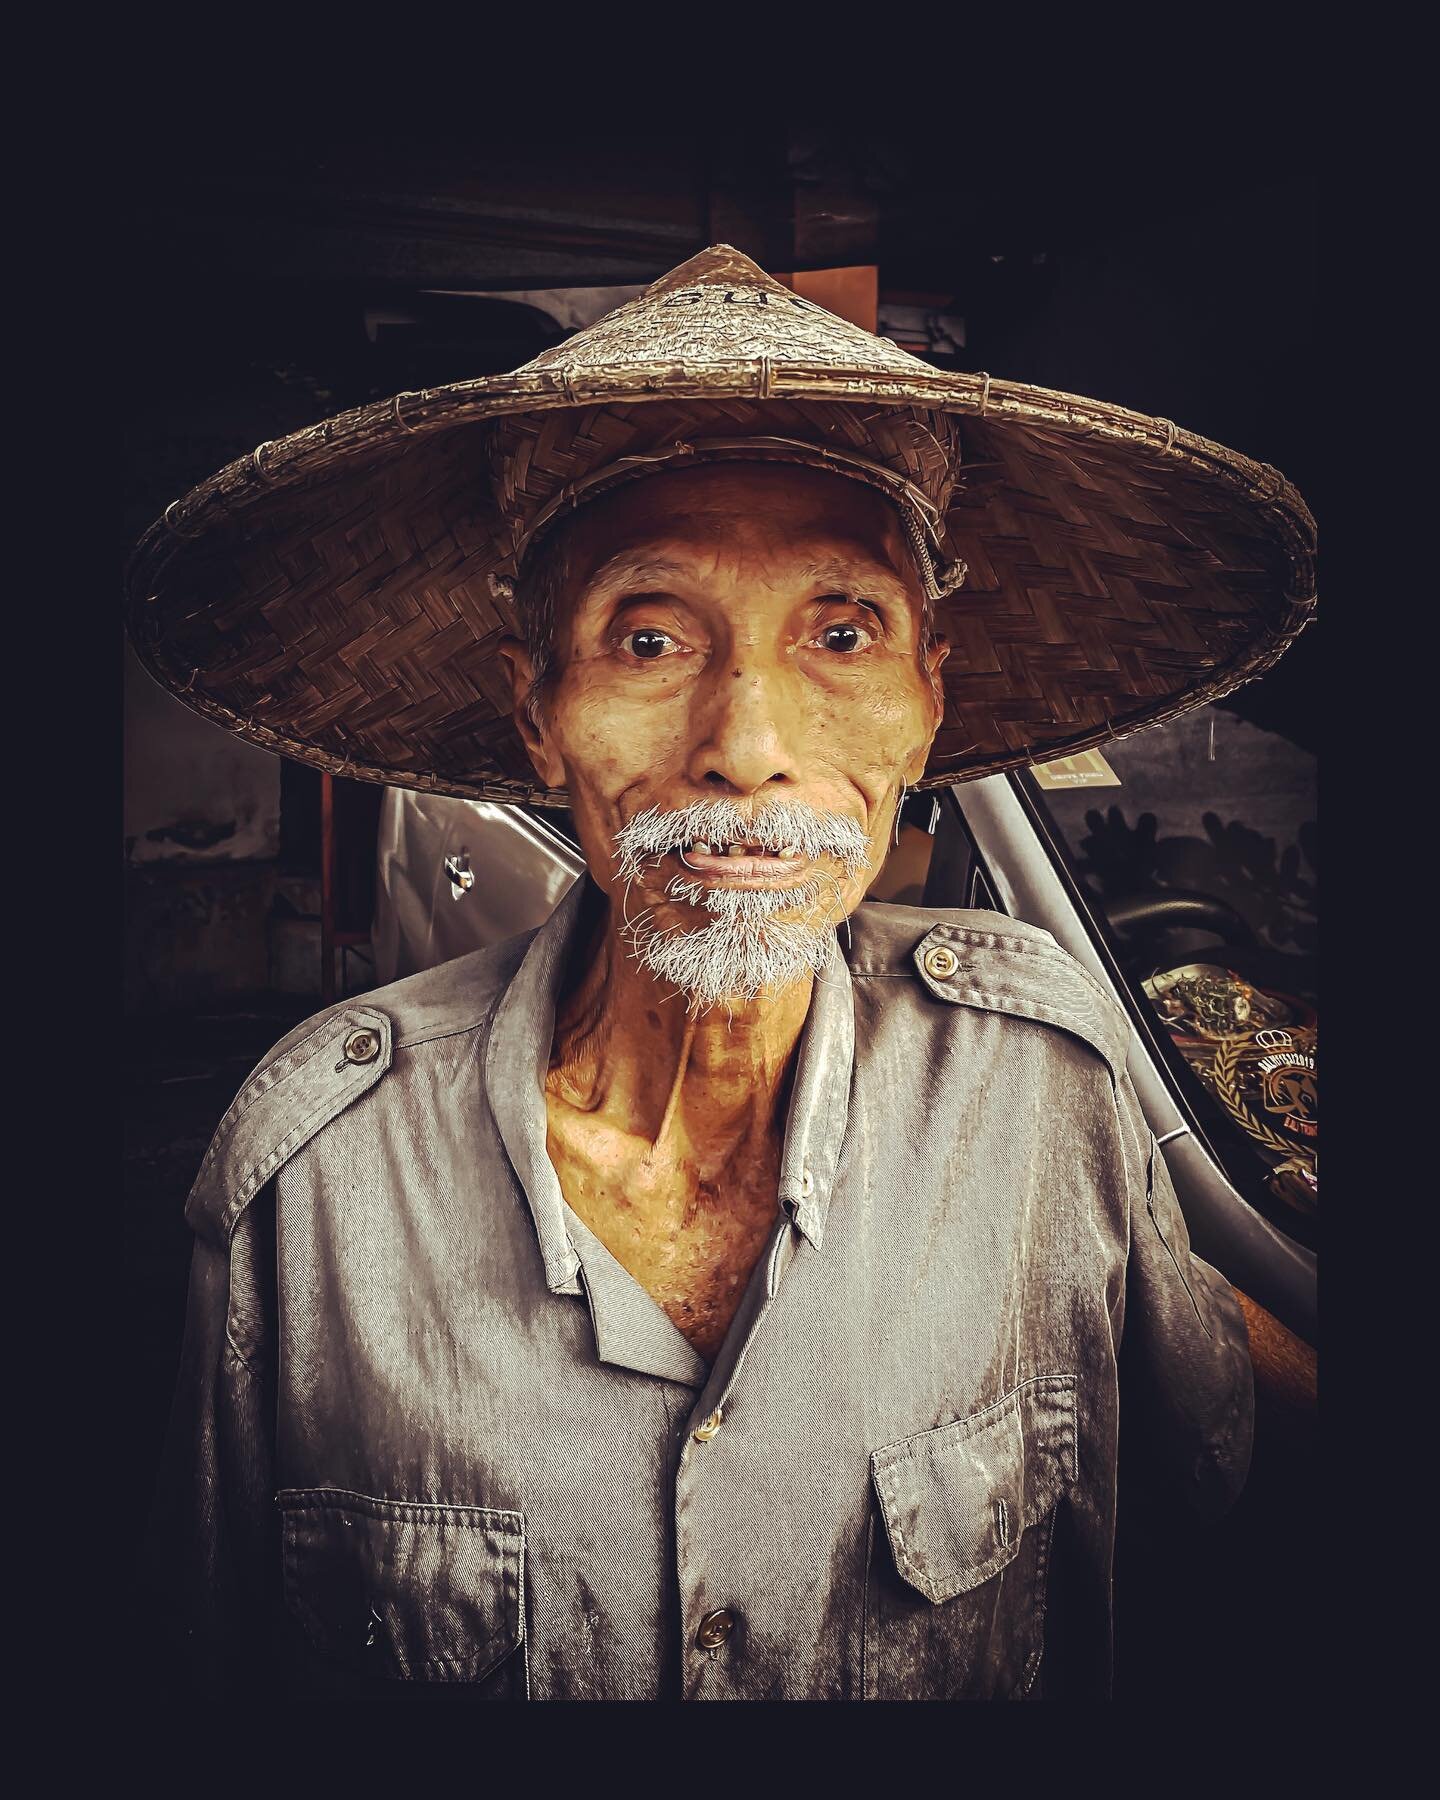 #bali #indonesia #33trekking #livelaughlove #travel #adventure #backpacking #explore #photography #travelphotography #blog #nomadic #liveauthentic #worldtravel #artofvisuals #scenic #natgeo #blog #page #danajonchappelle #shotoniphone